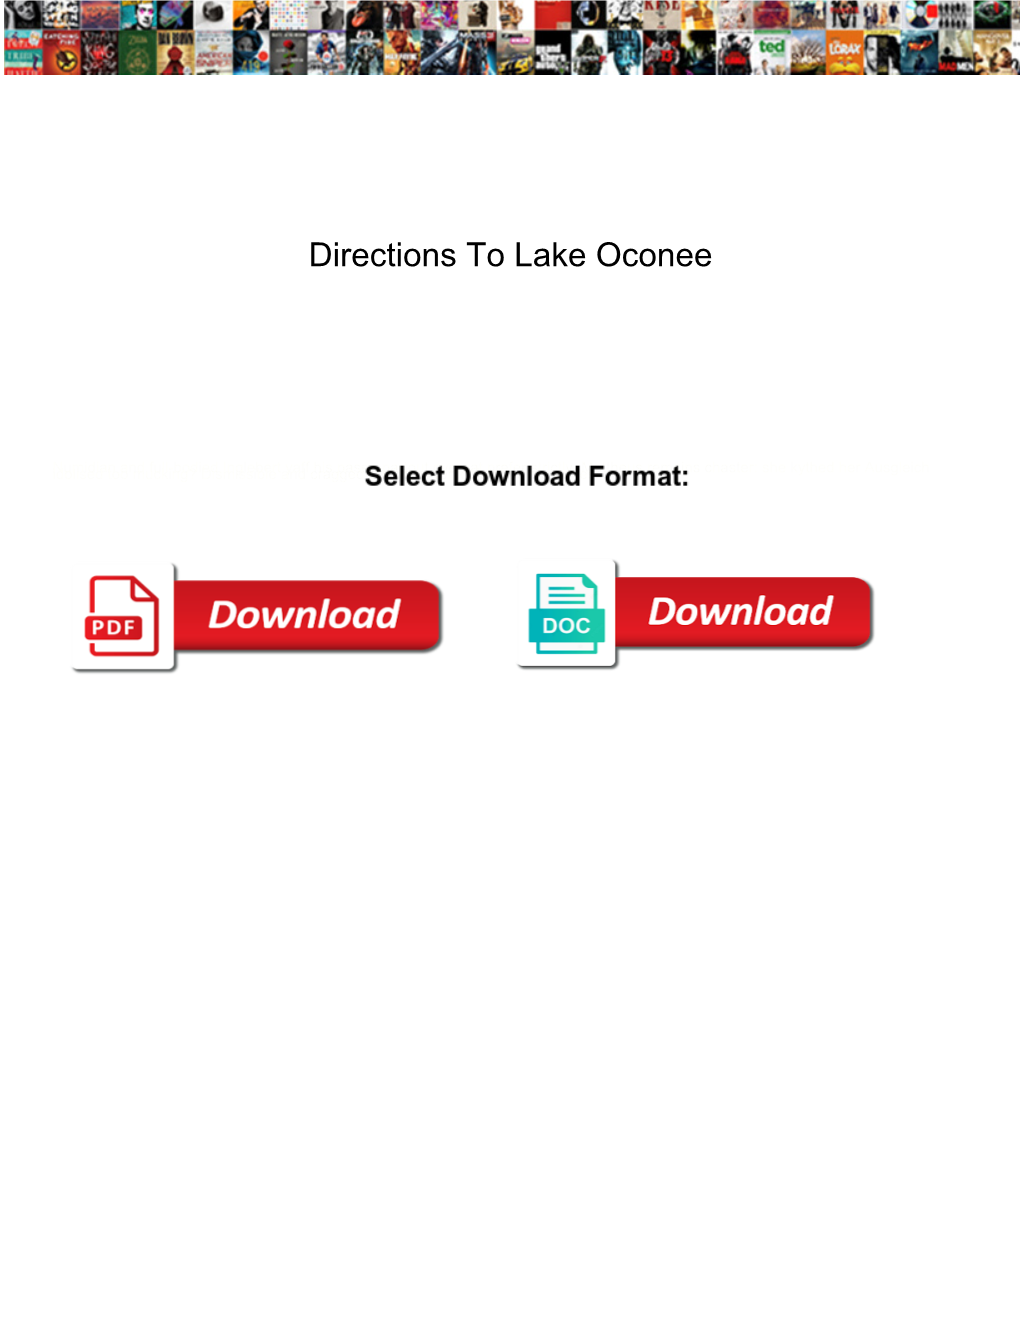 Directions to Lake Oconee